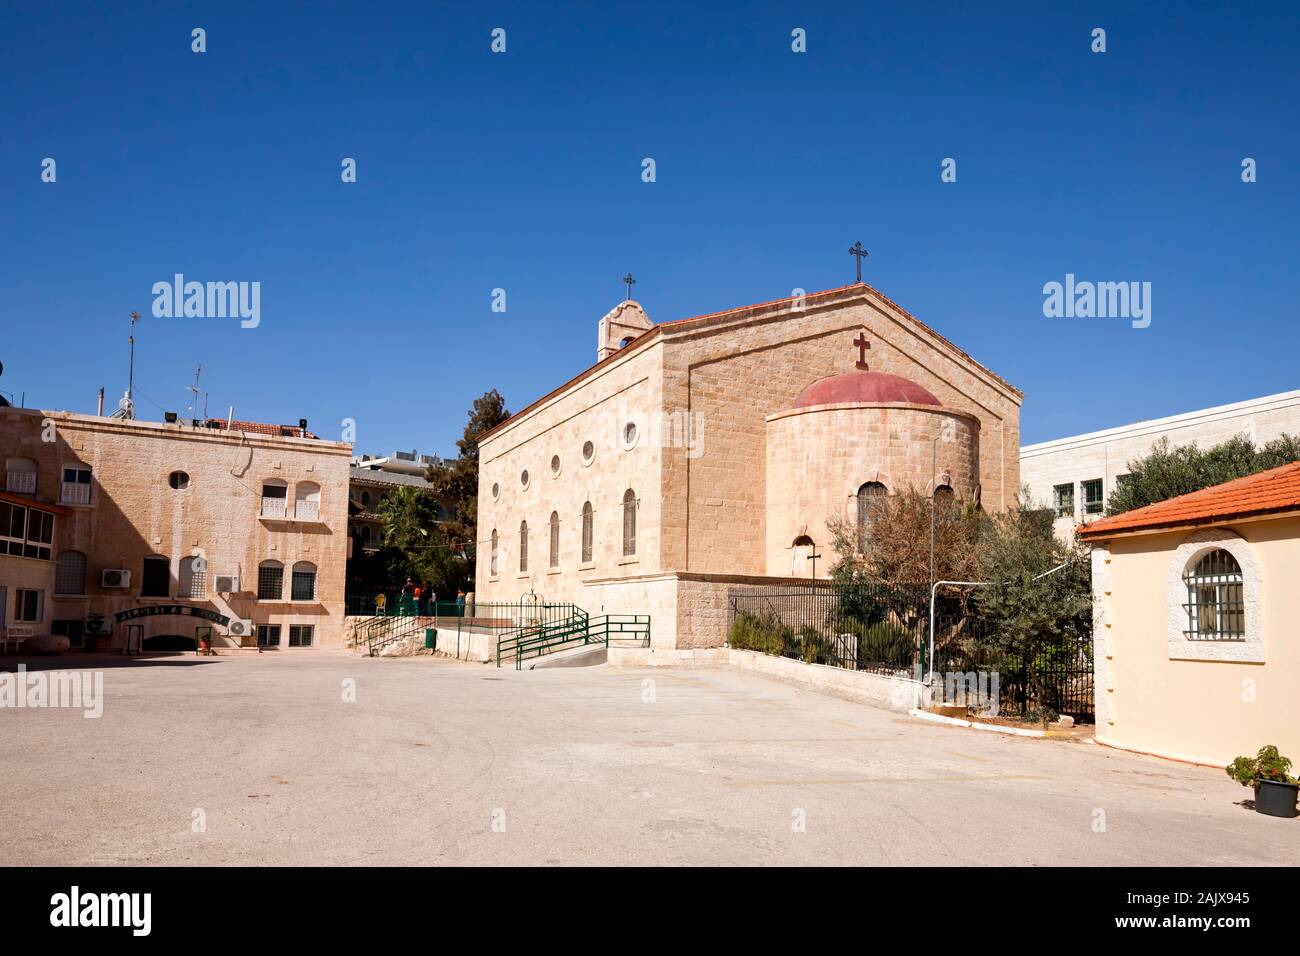 St. George's Church, älteste Bodenmosaikkarte Palästinas, Madaba, Jordanien, Naher Osten, Asien Stockfoto